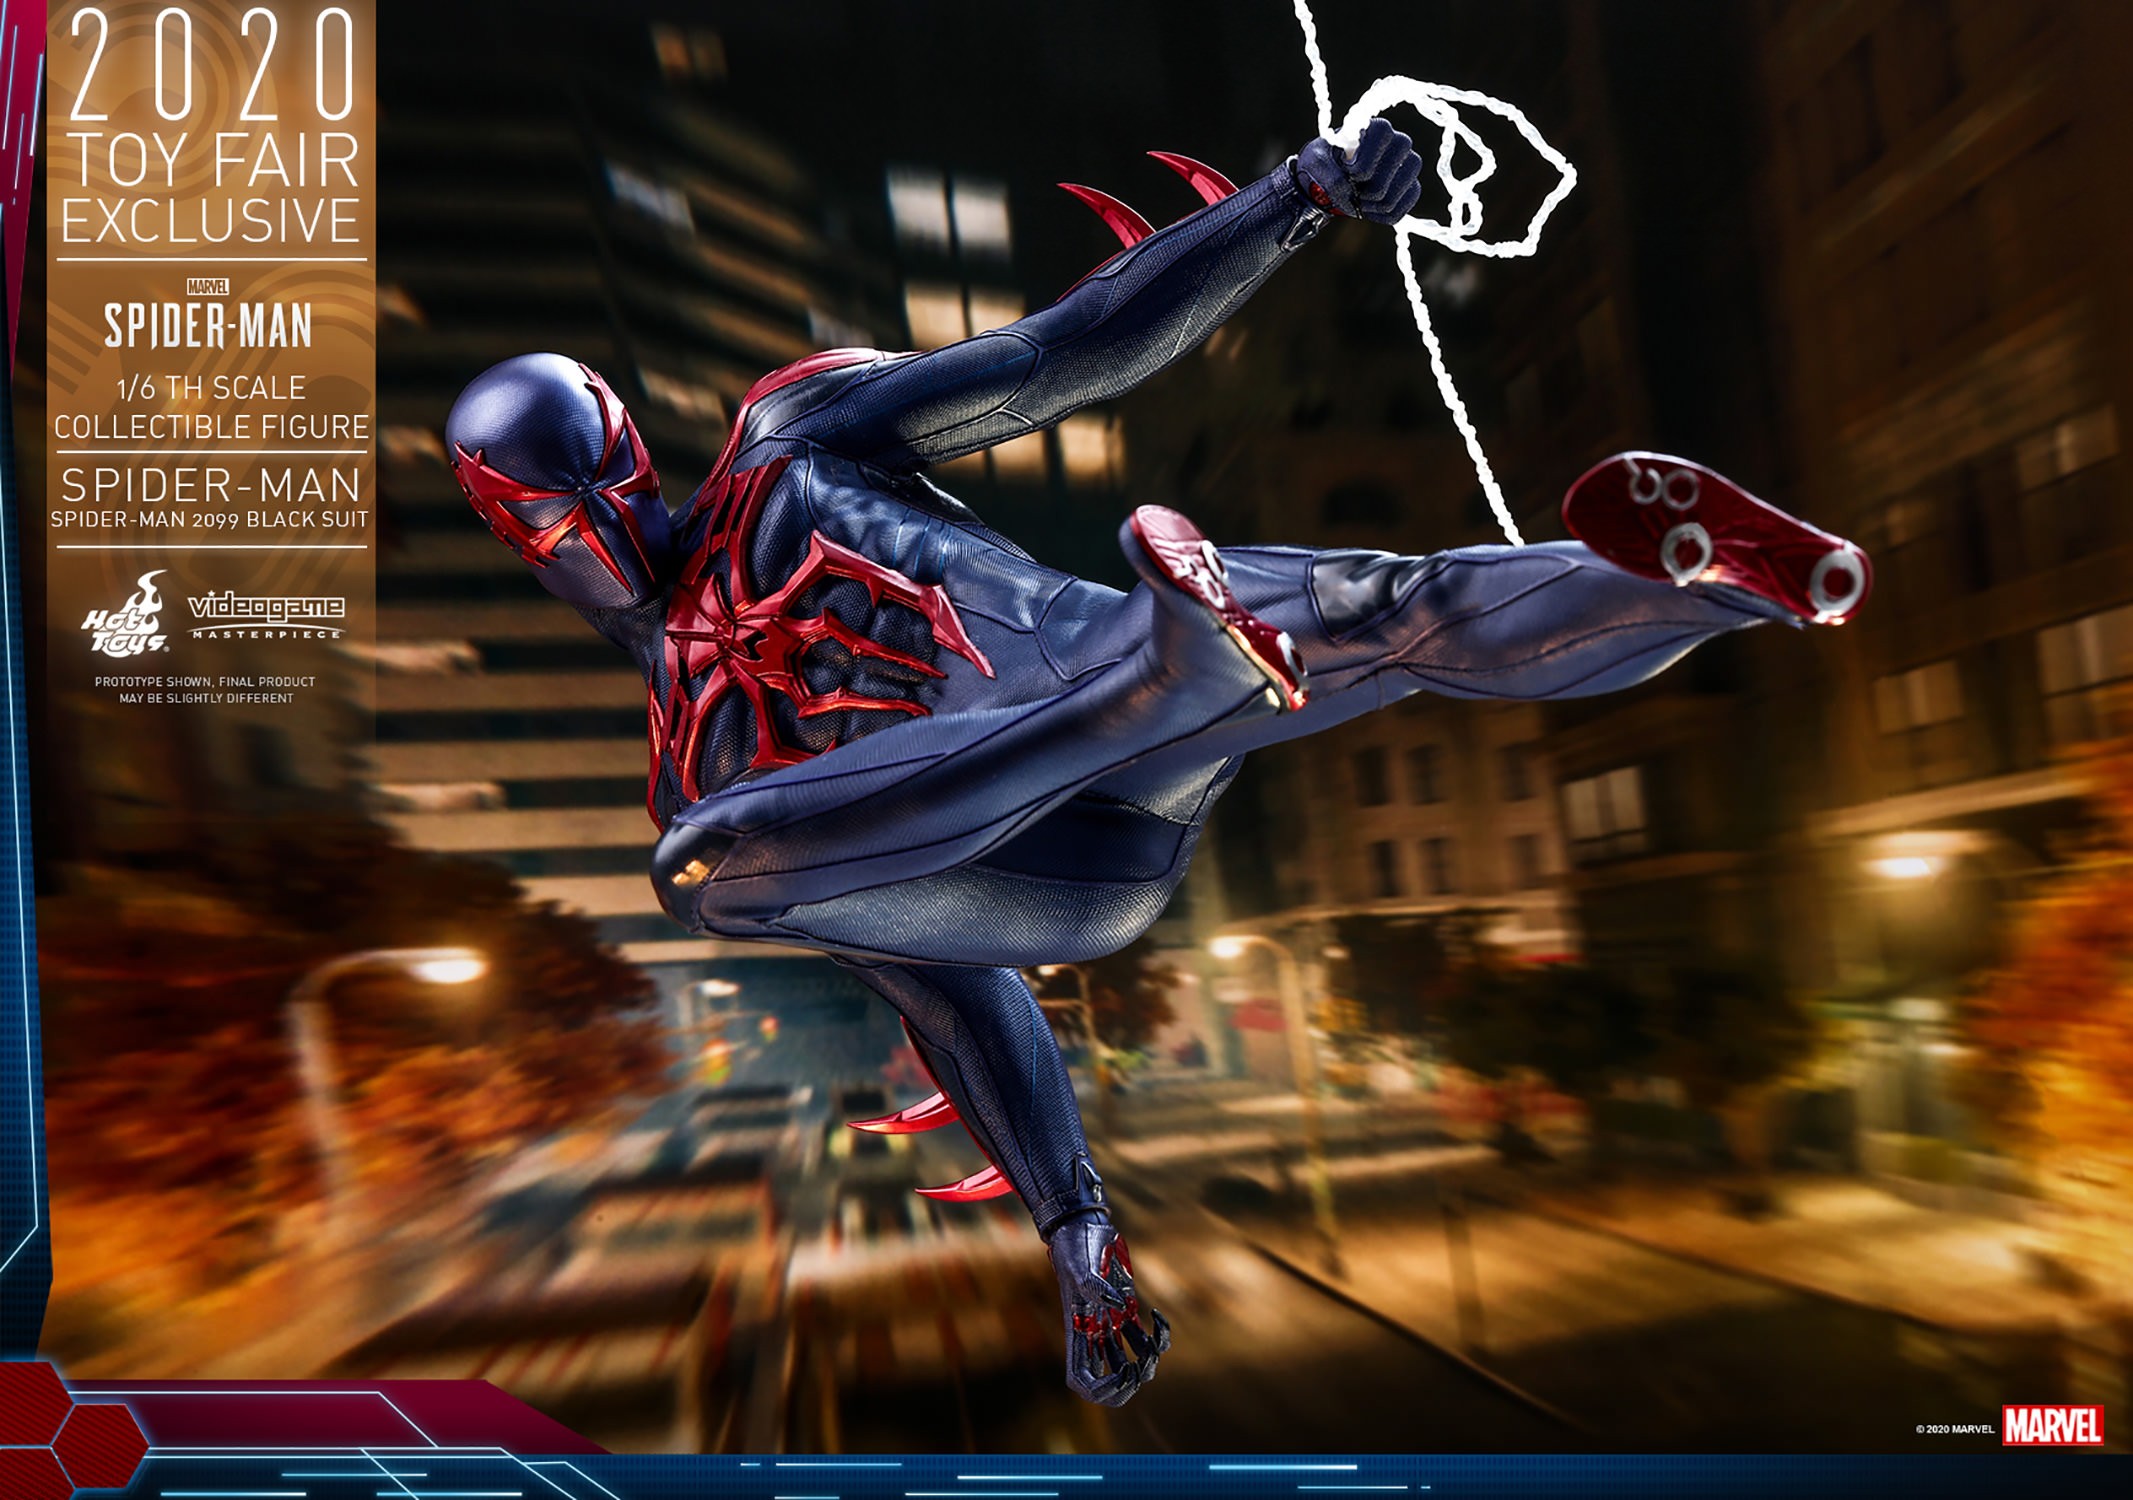 Spider-Man (Spider-Man 2099 Black Suit) Exclusive Edition (Prototype Shown) View 15